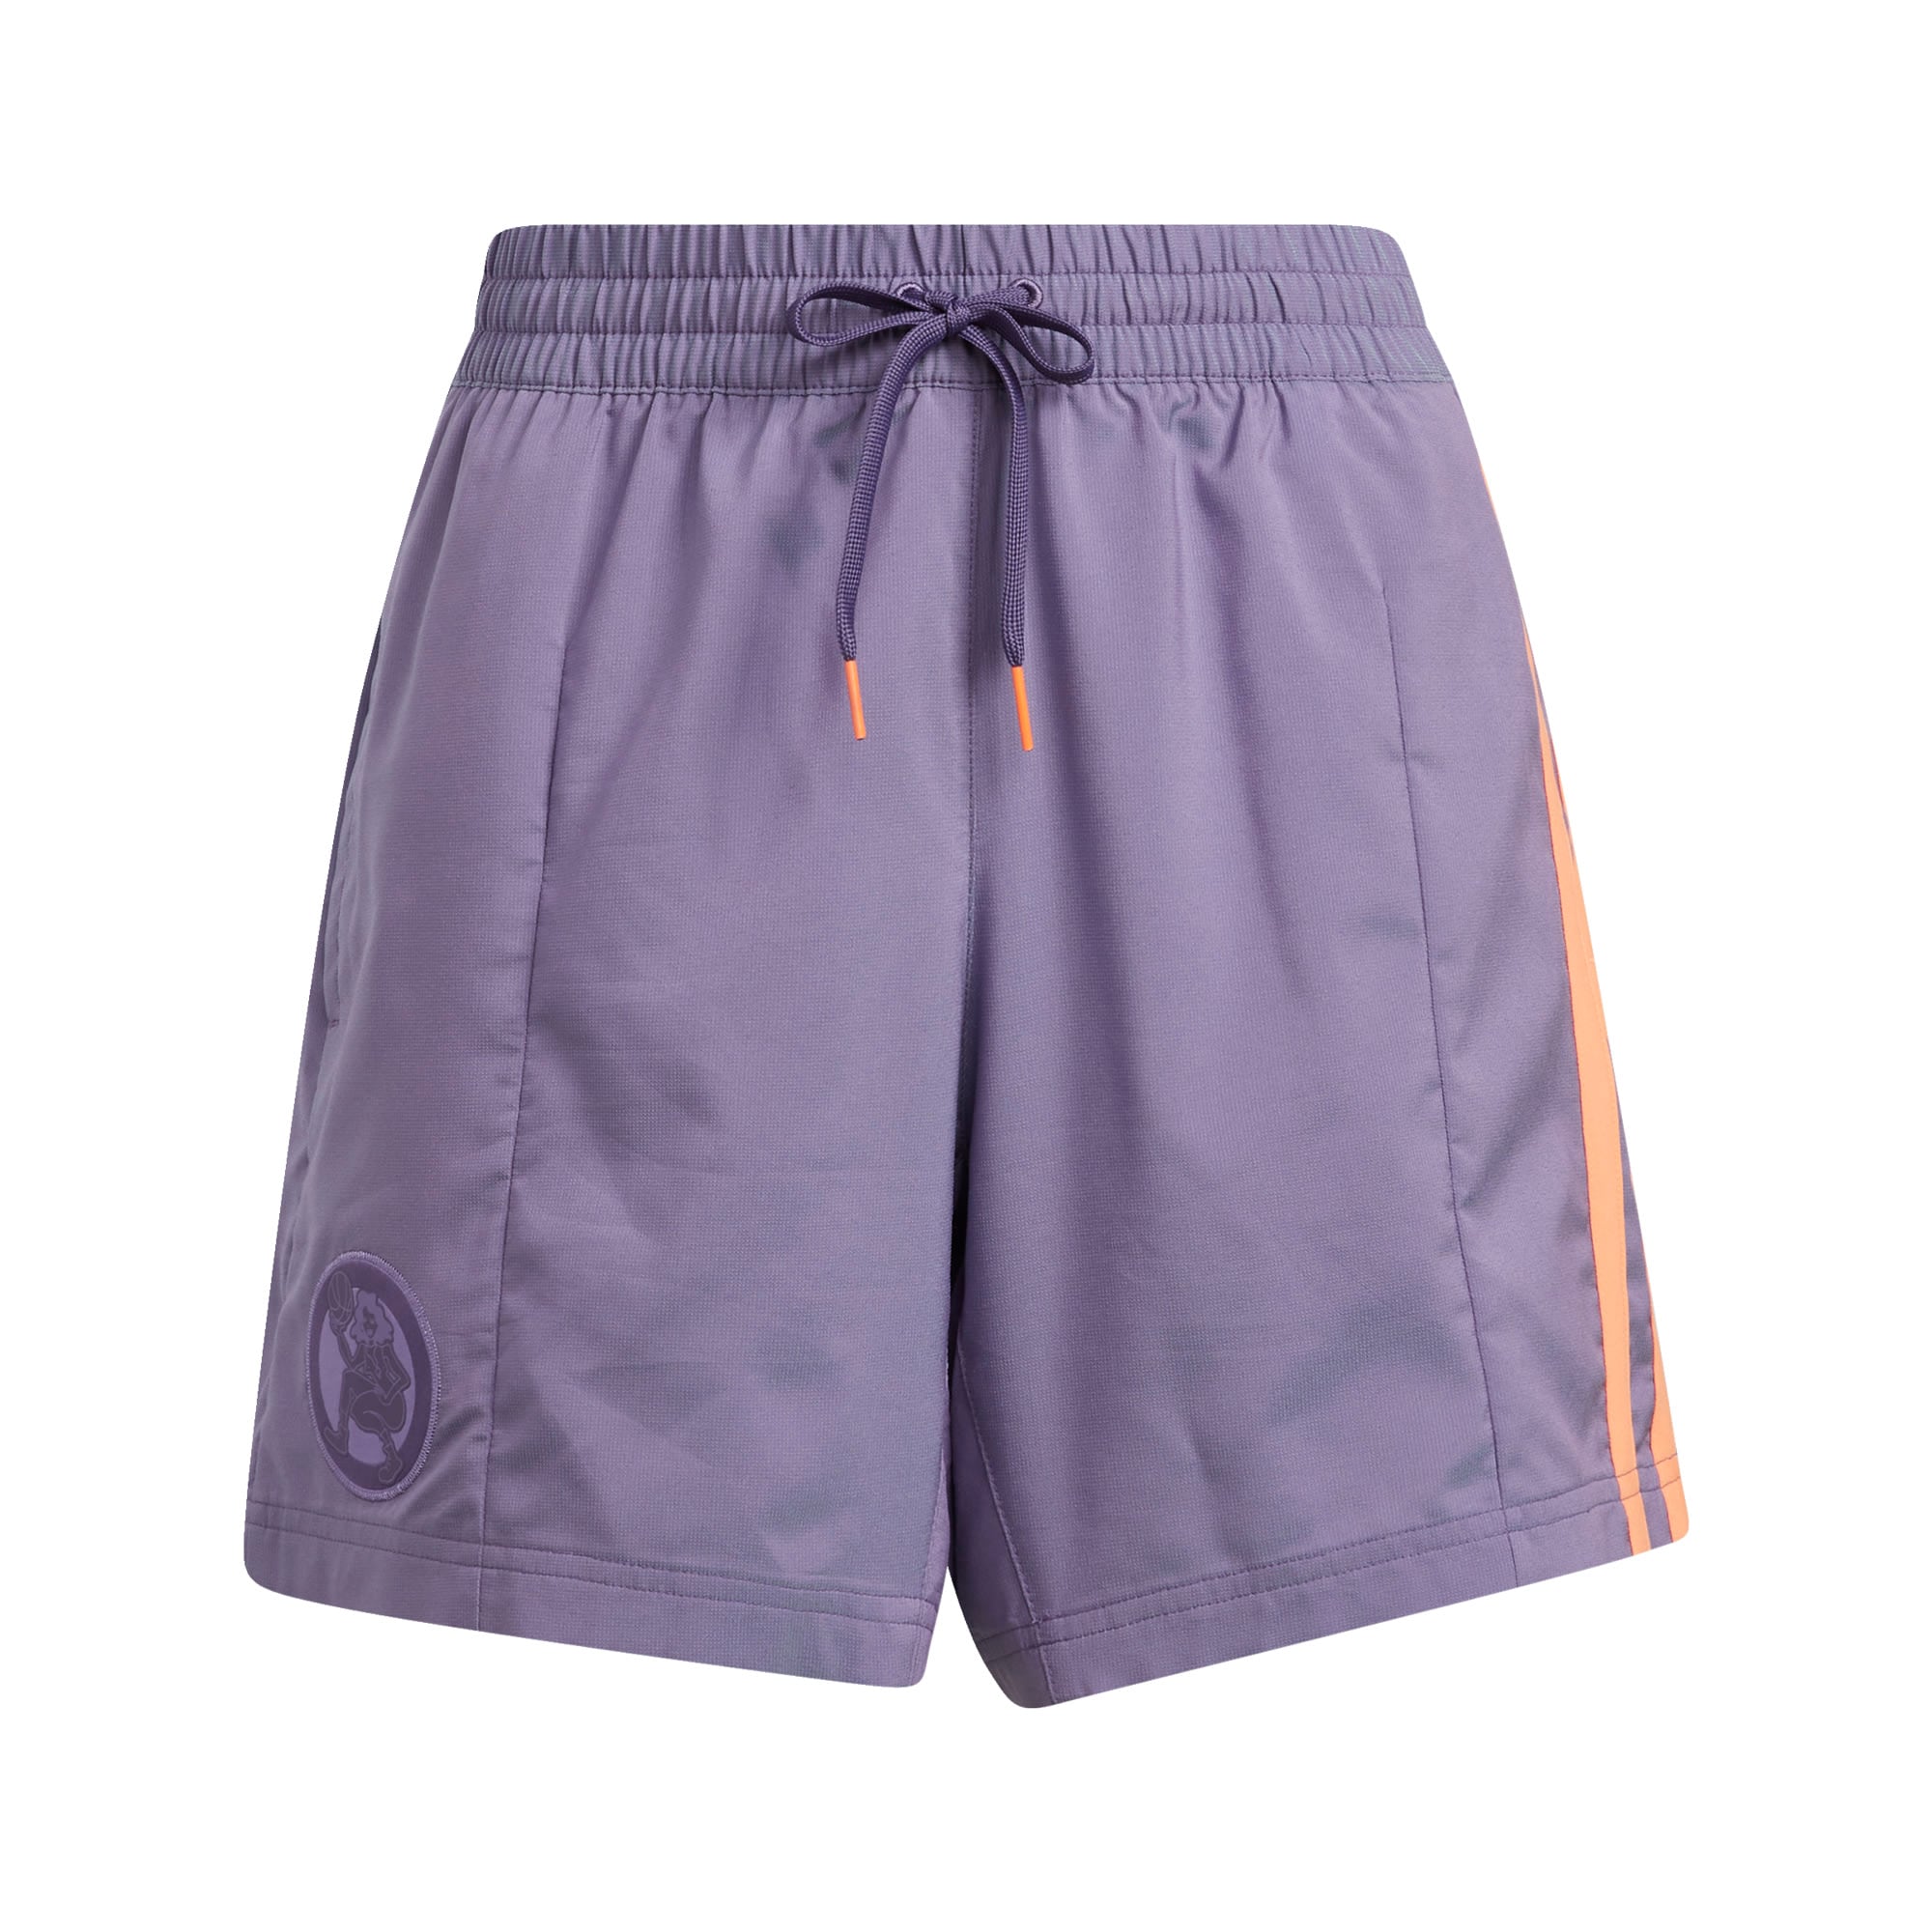 ADIDAS PERFORMANCE Športne hlače  svetlo lila / oranžna